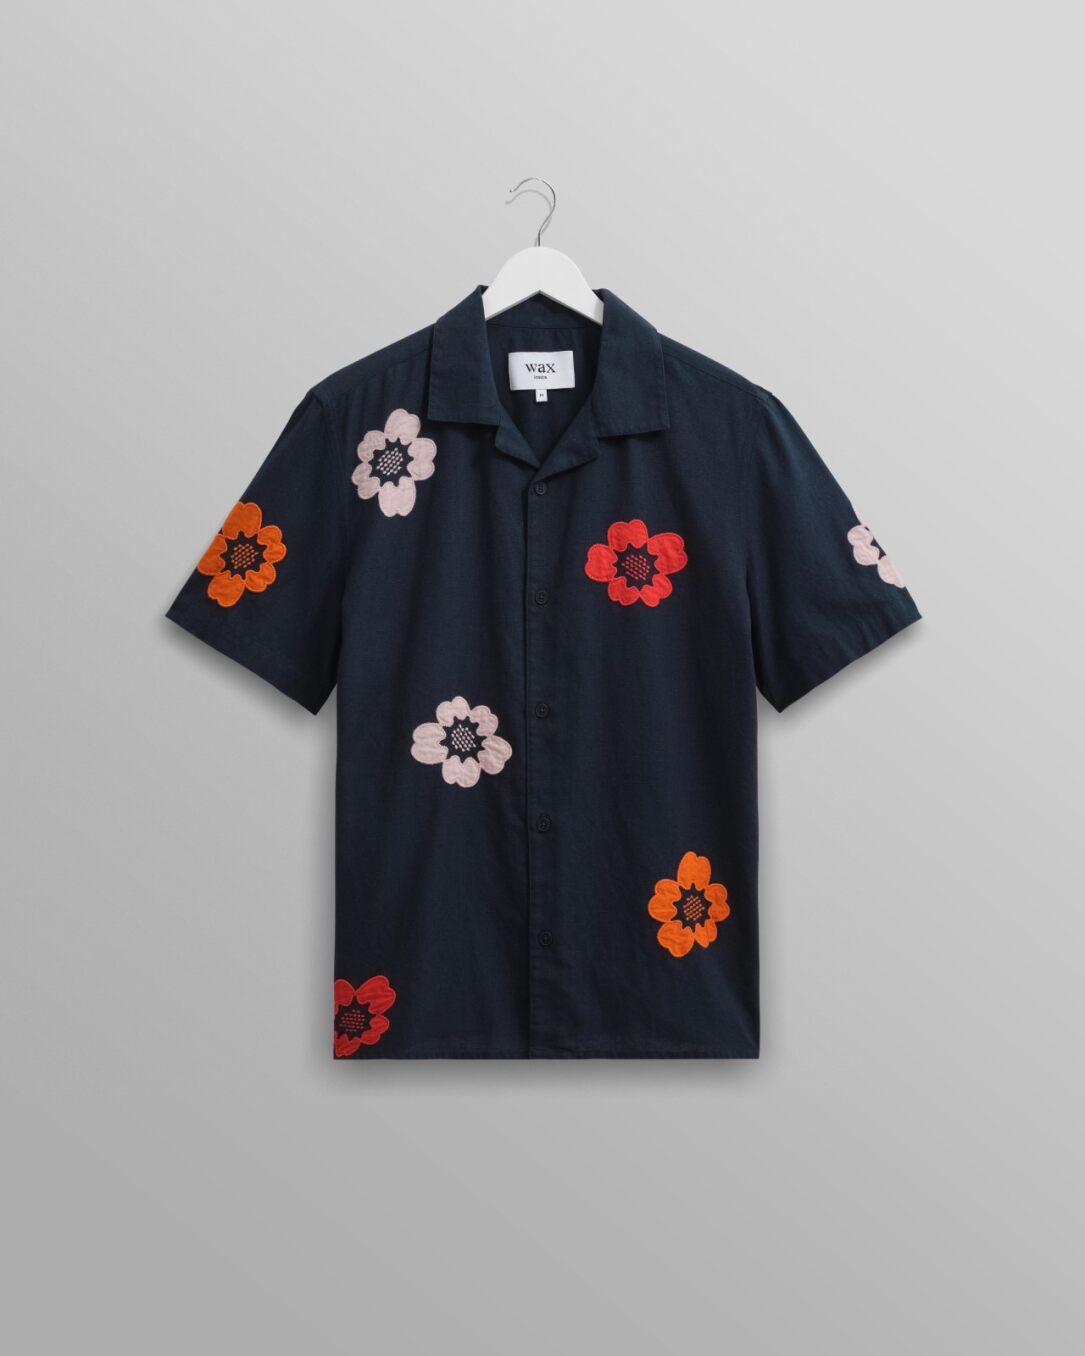 Wax London- Didcot SS Shirt Applique Floral Navy